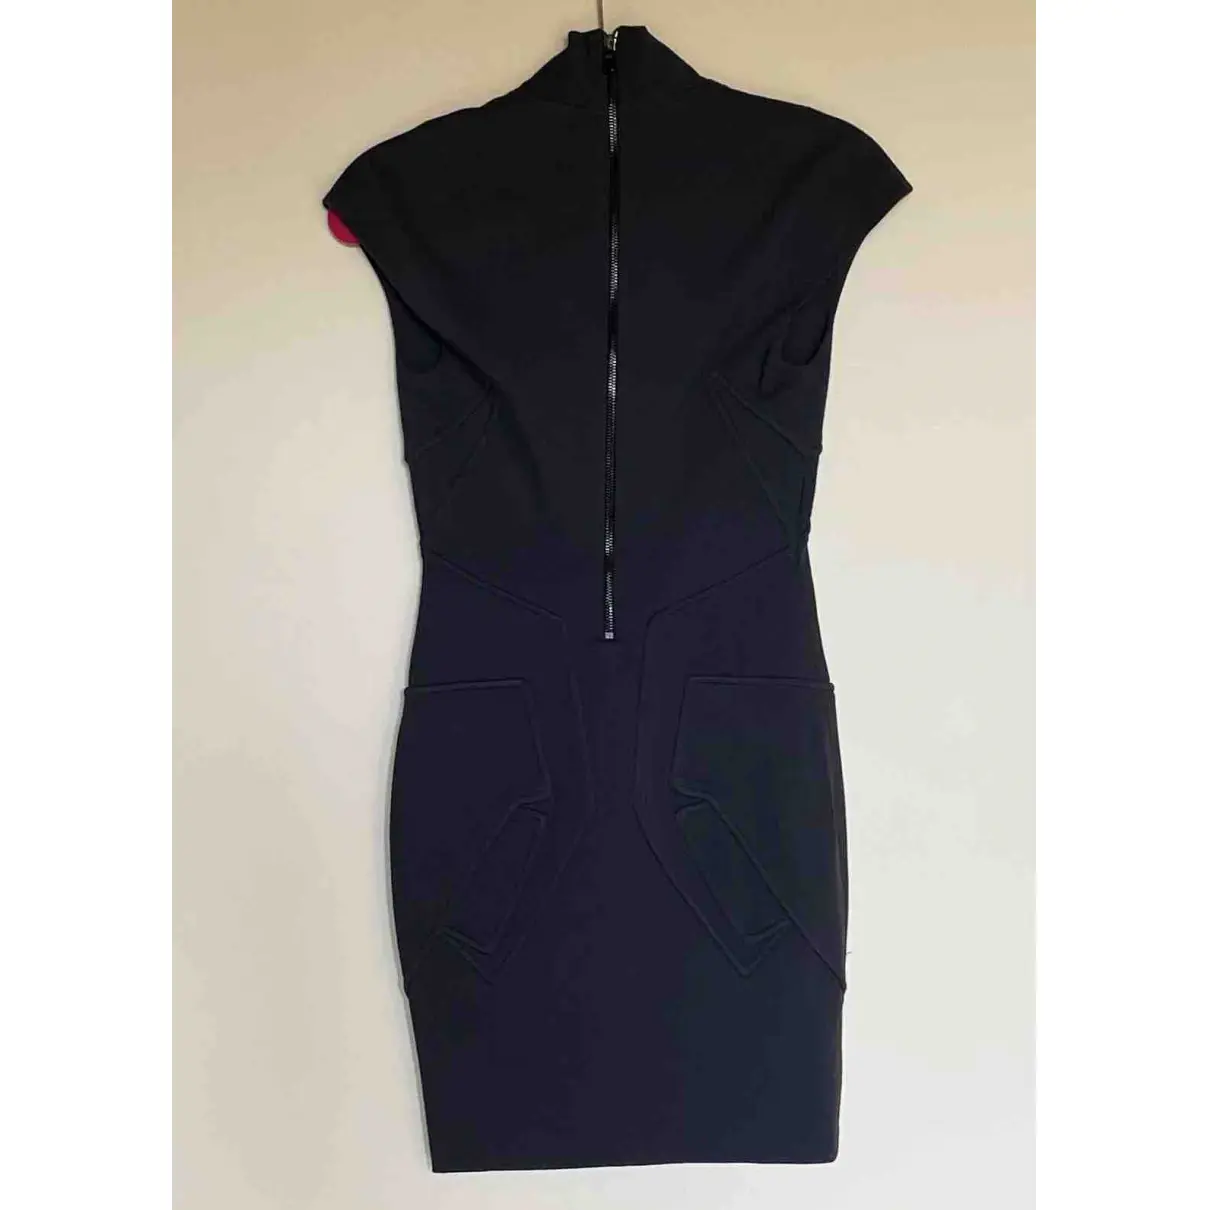 Buy Kimberly Ovitz Mini dress online